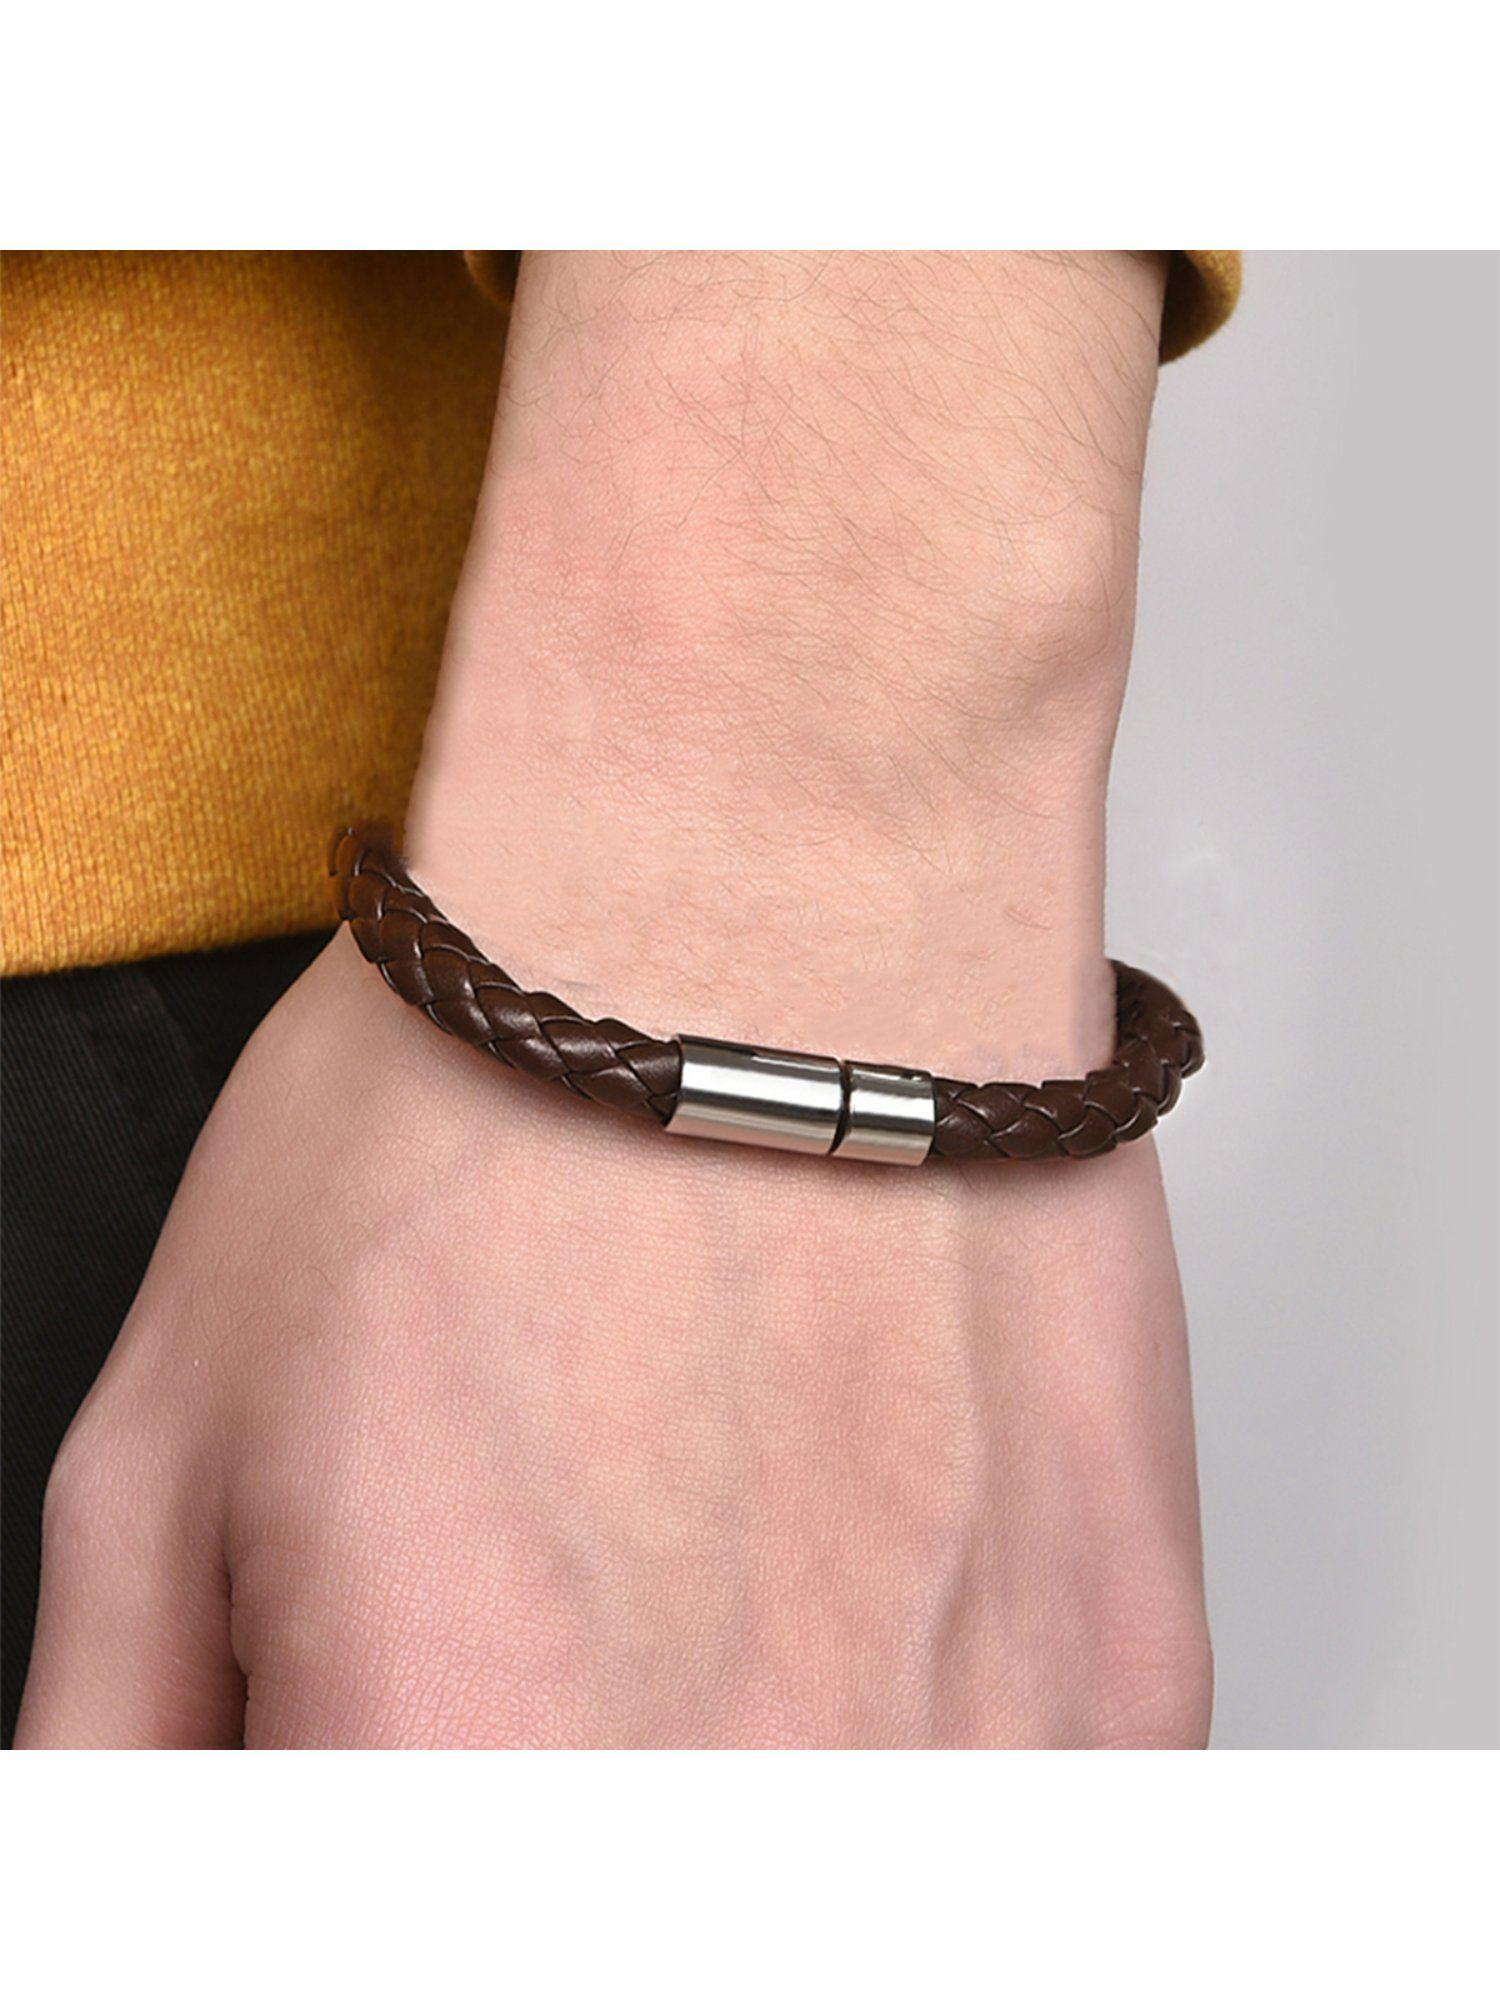 unisex brown & silver-toned leather wraparound bracelet